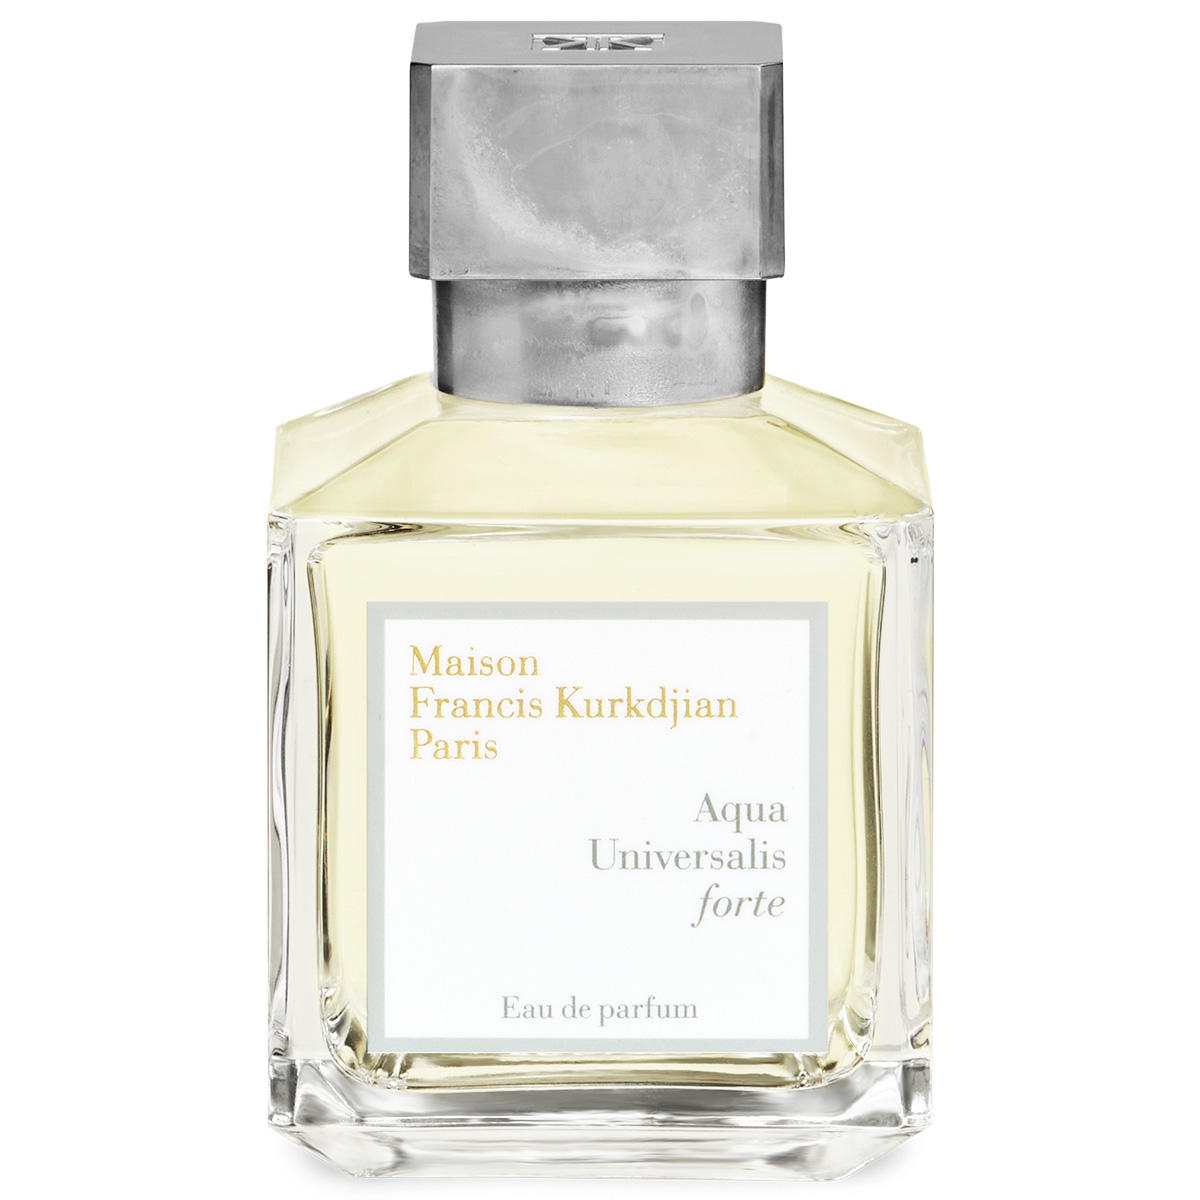 Maison Francis Kurkdjian Paris Aqua Universalis forte Eau de Parfum  - 1